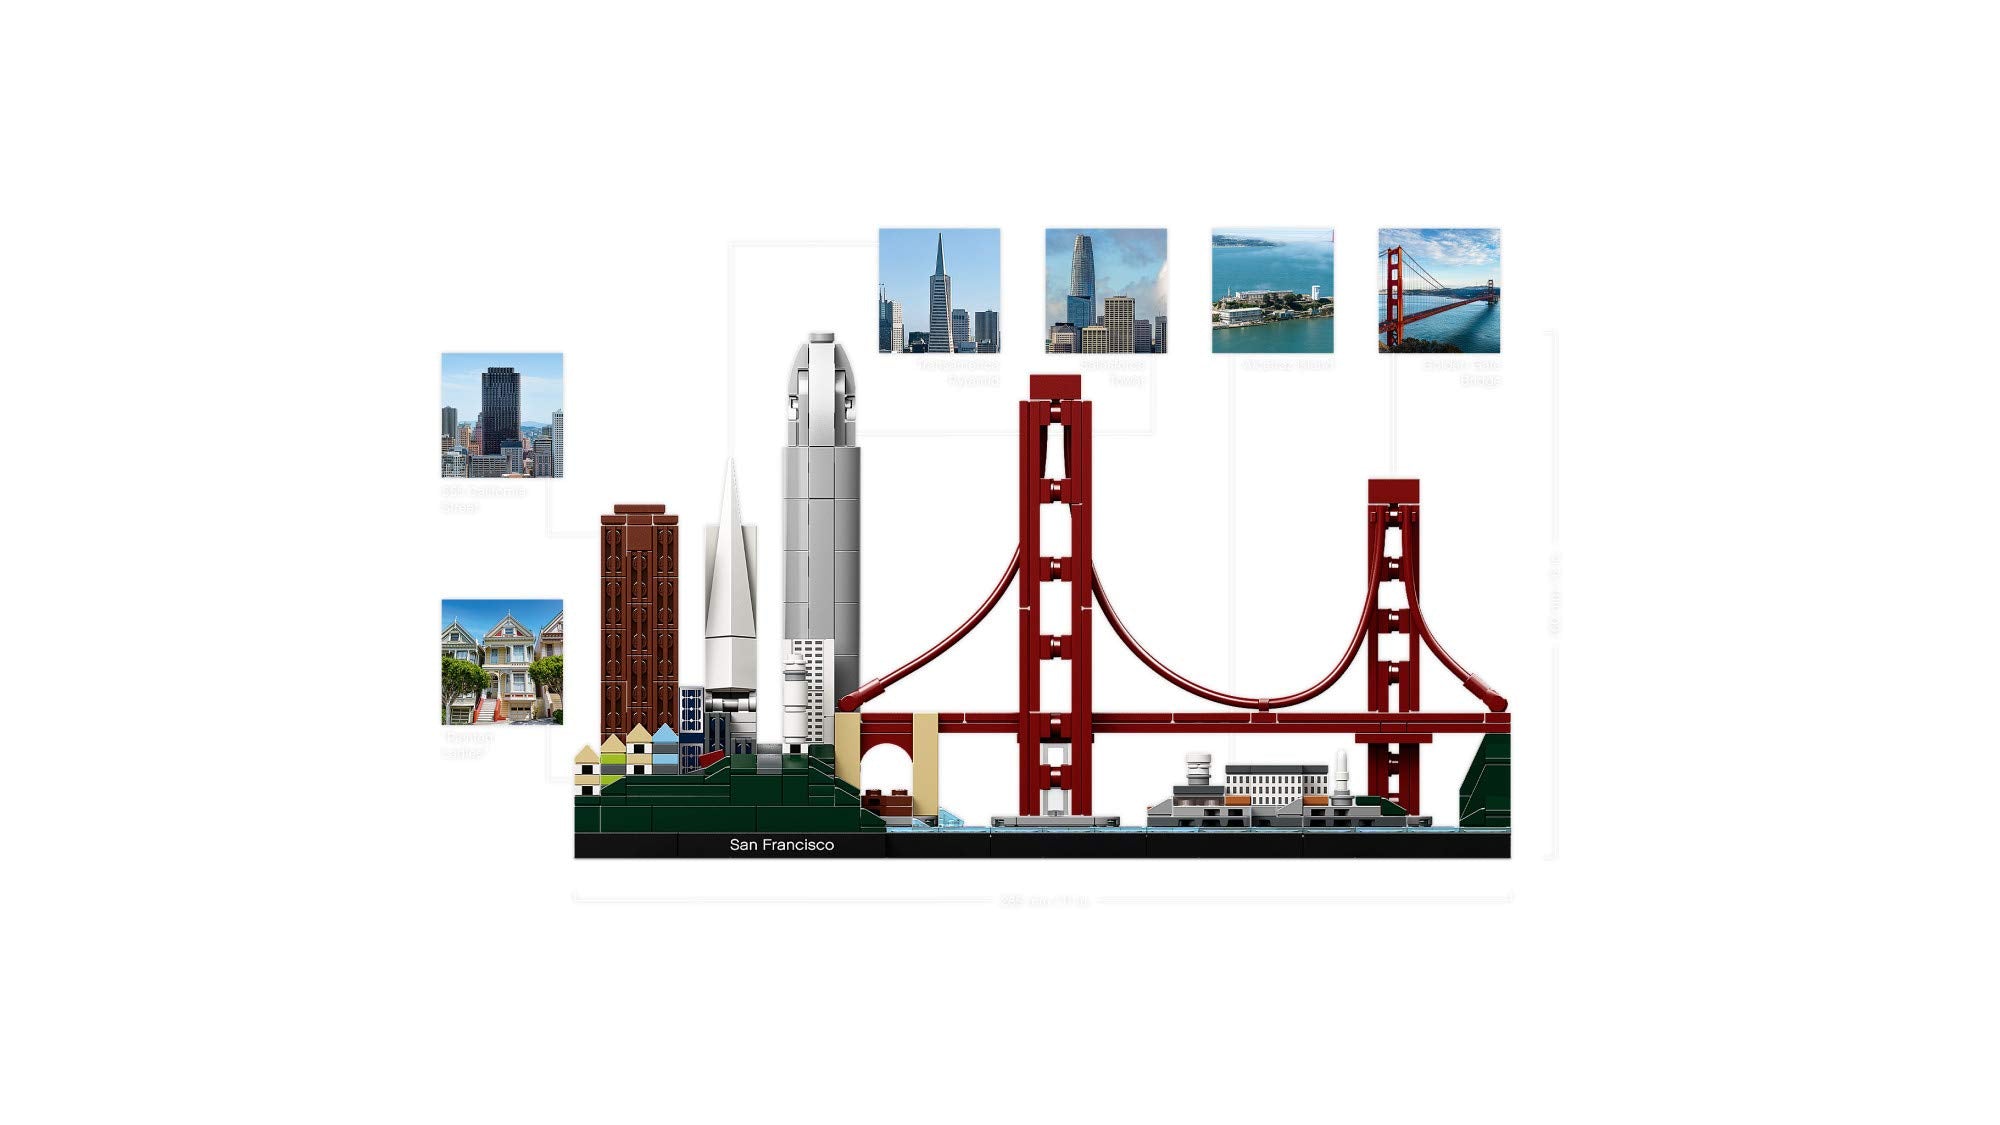 LEGO Architecture Skyline Collection 21043 San Francisco Building Kit (565 Piece)